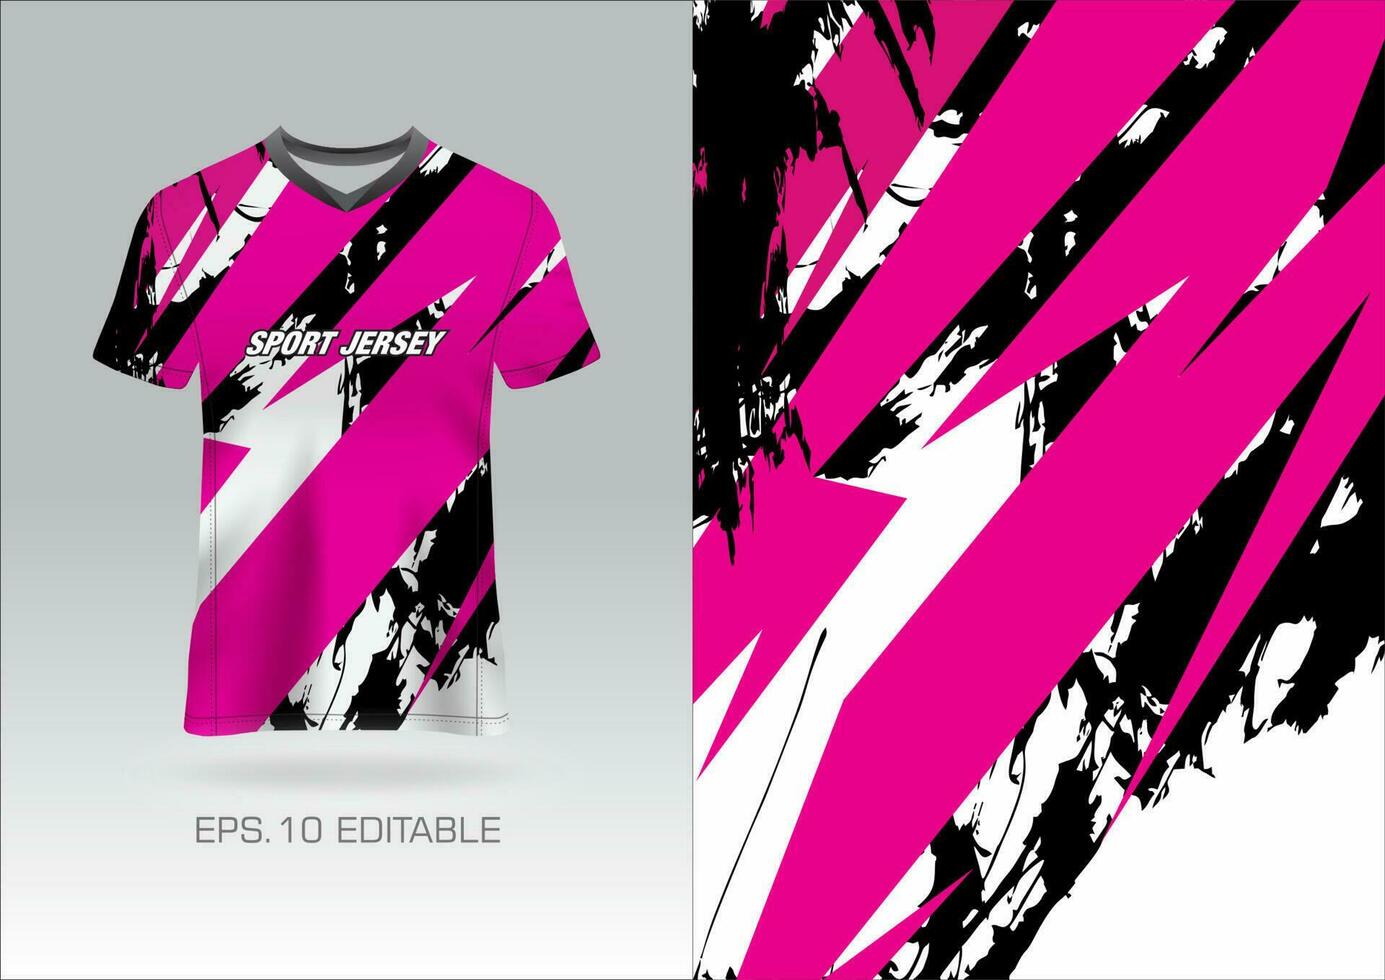 Sports jersey design grunge for team uniforms soccer jersey racing jersey vector